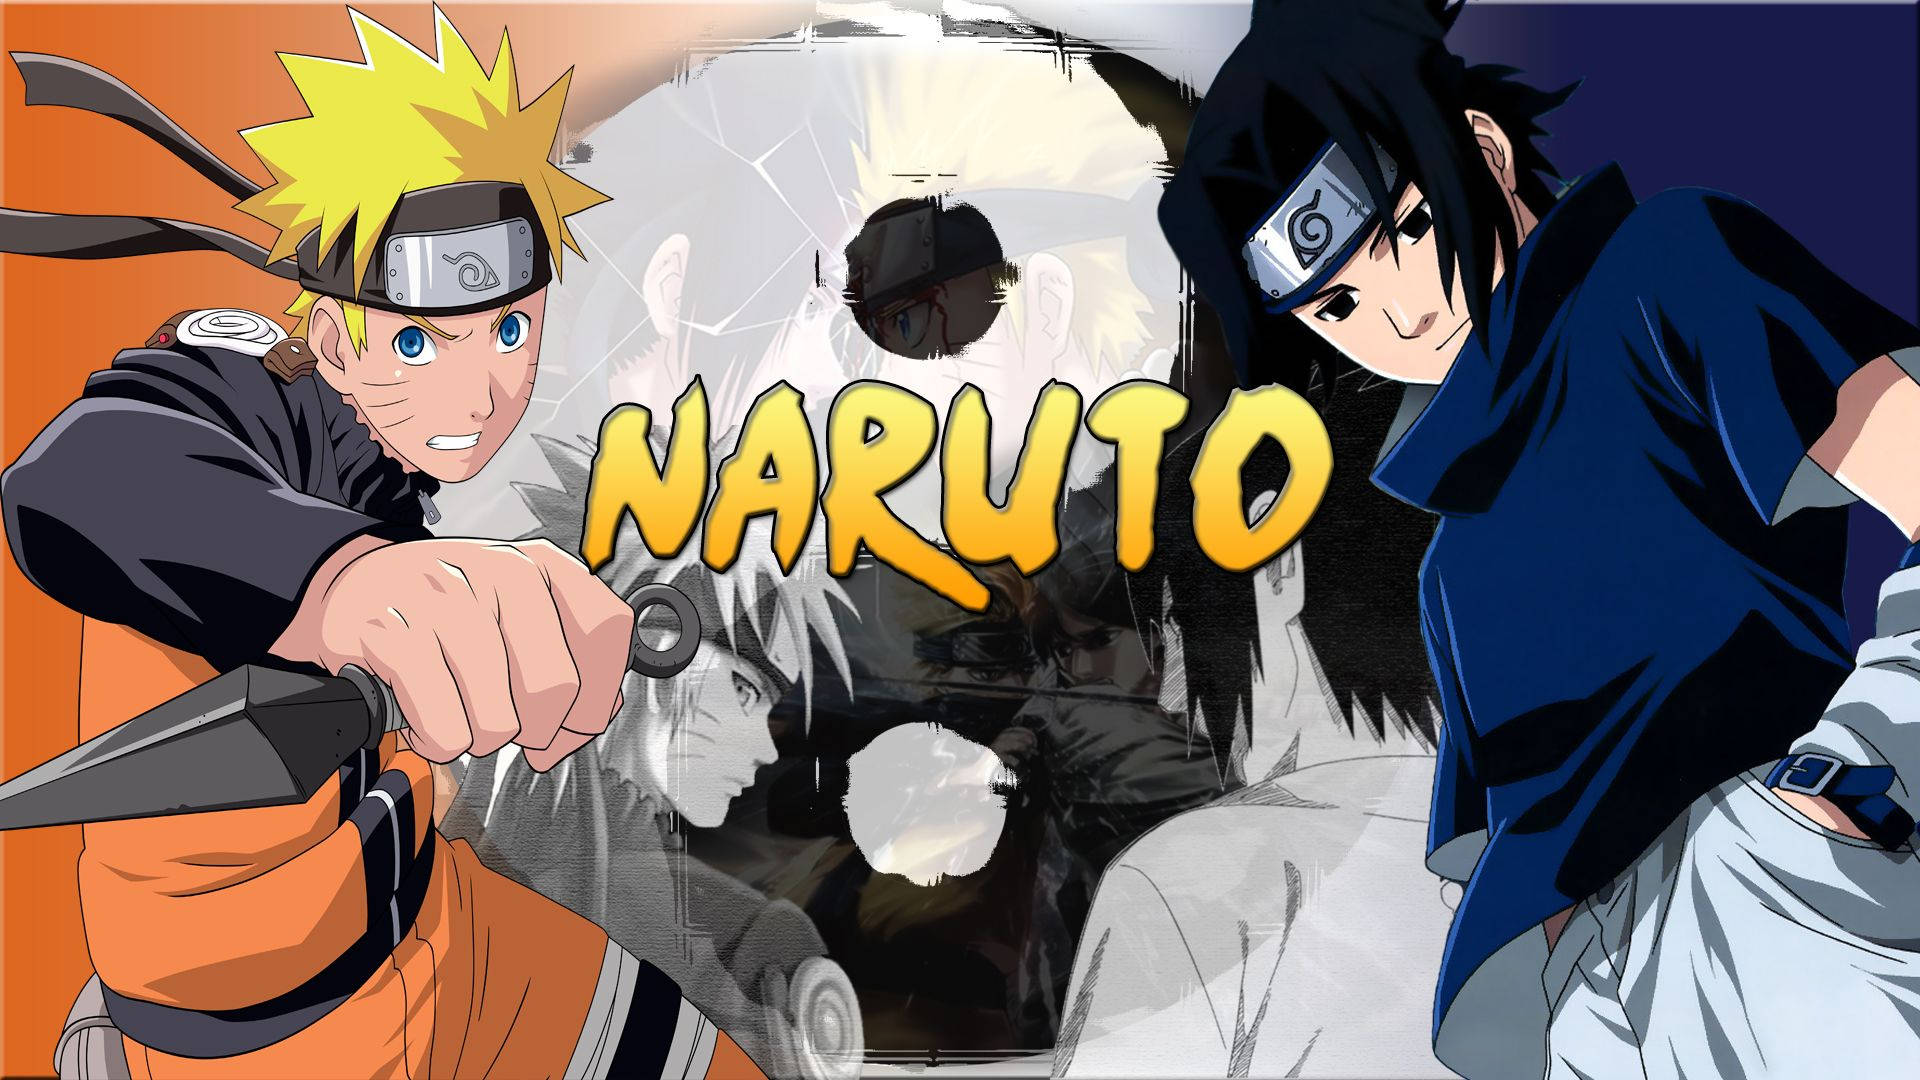 Awesome Naruto With Uchiha Background